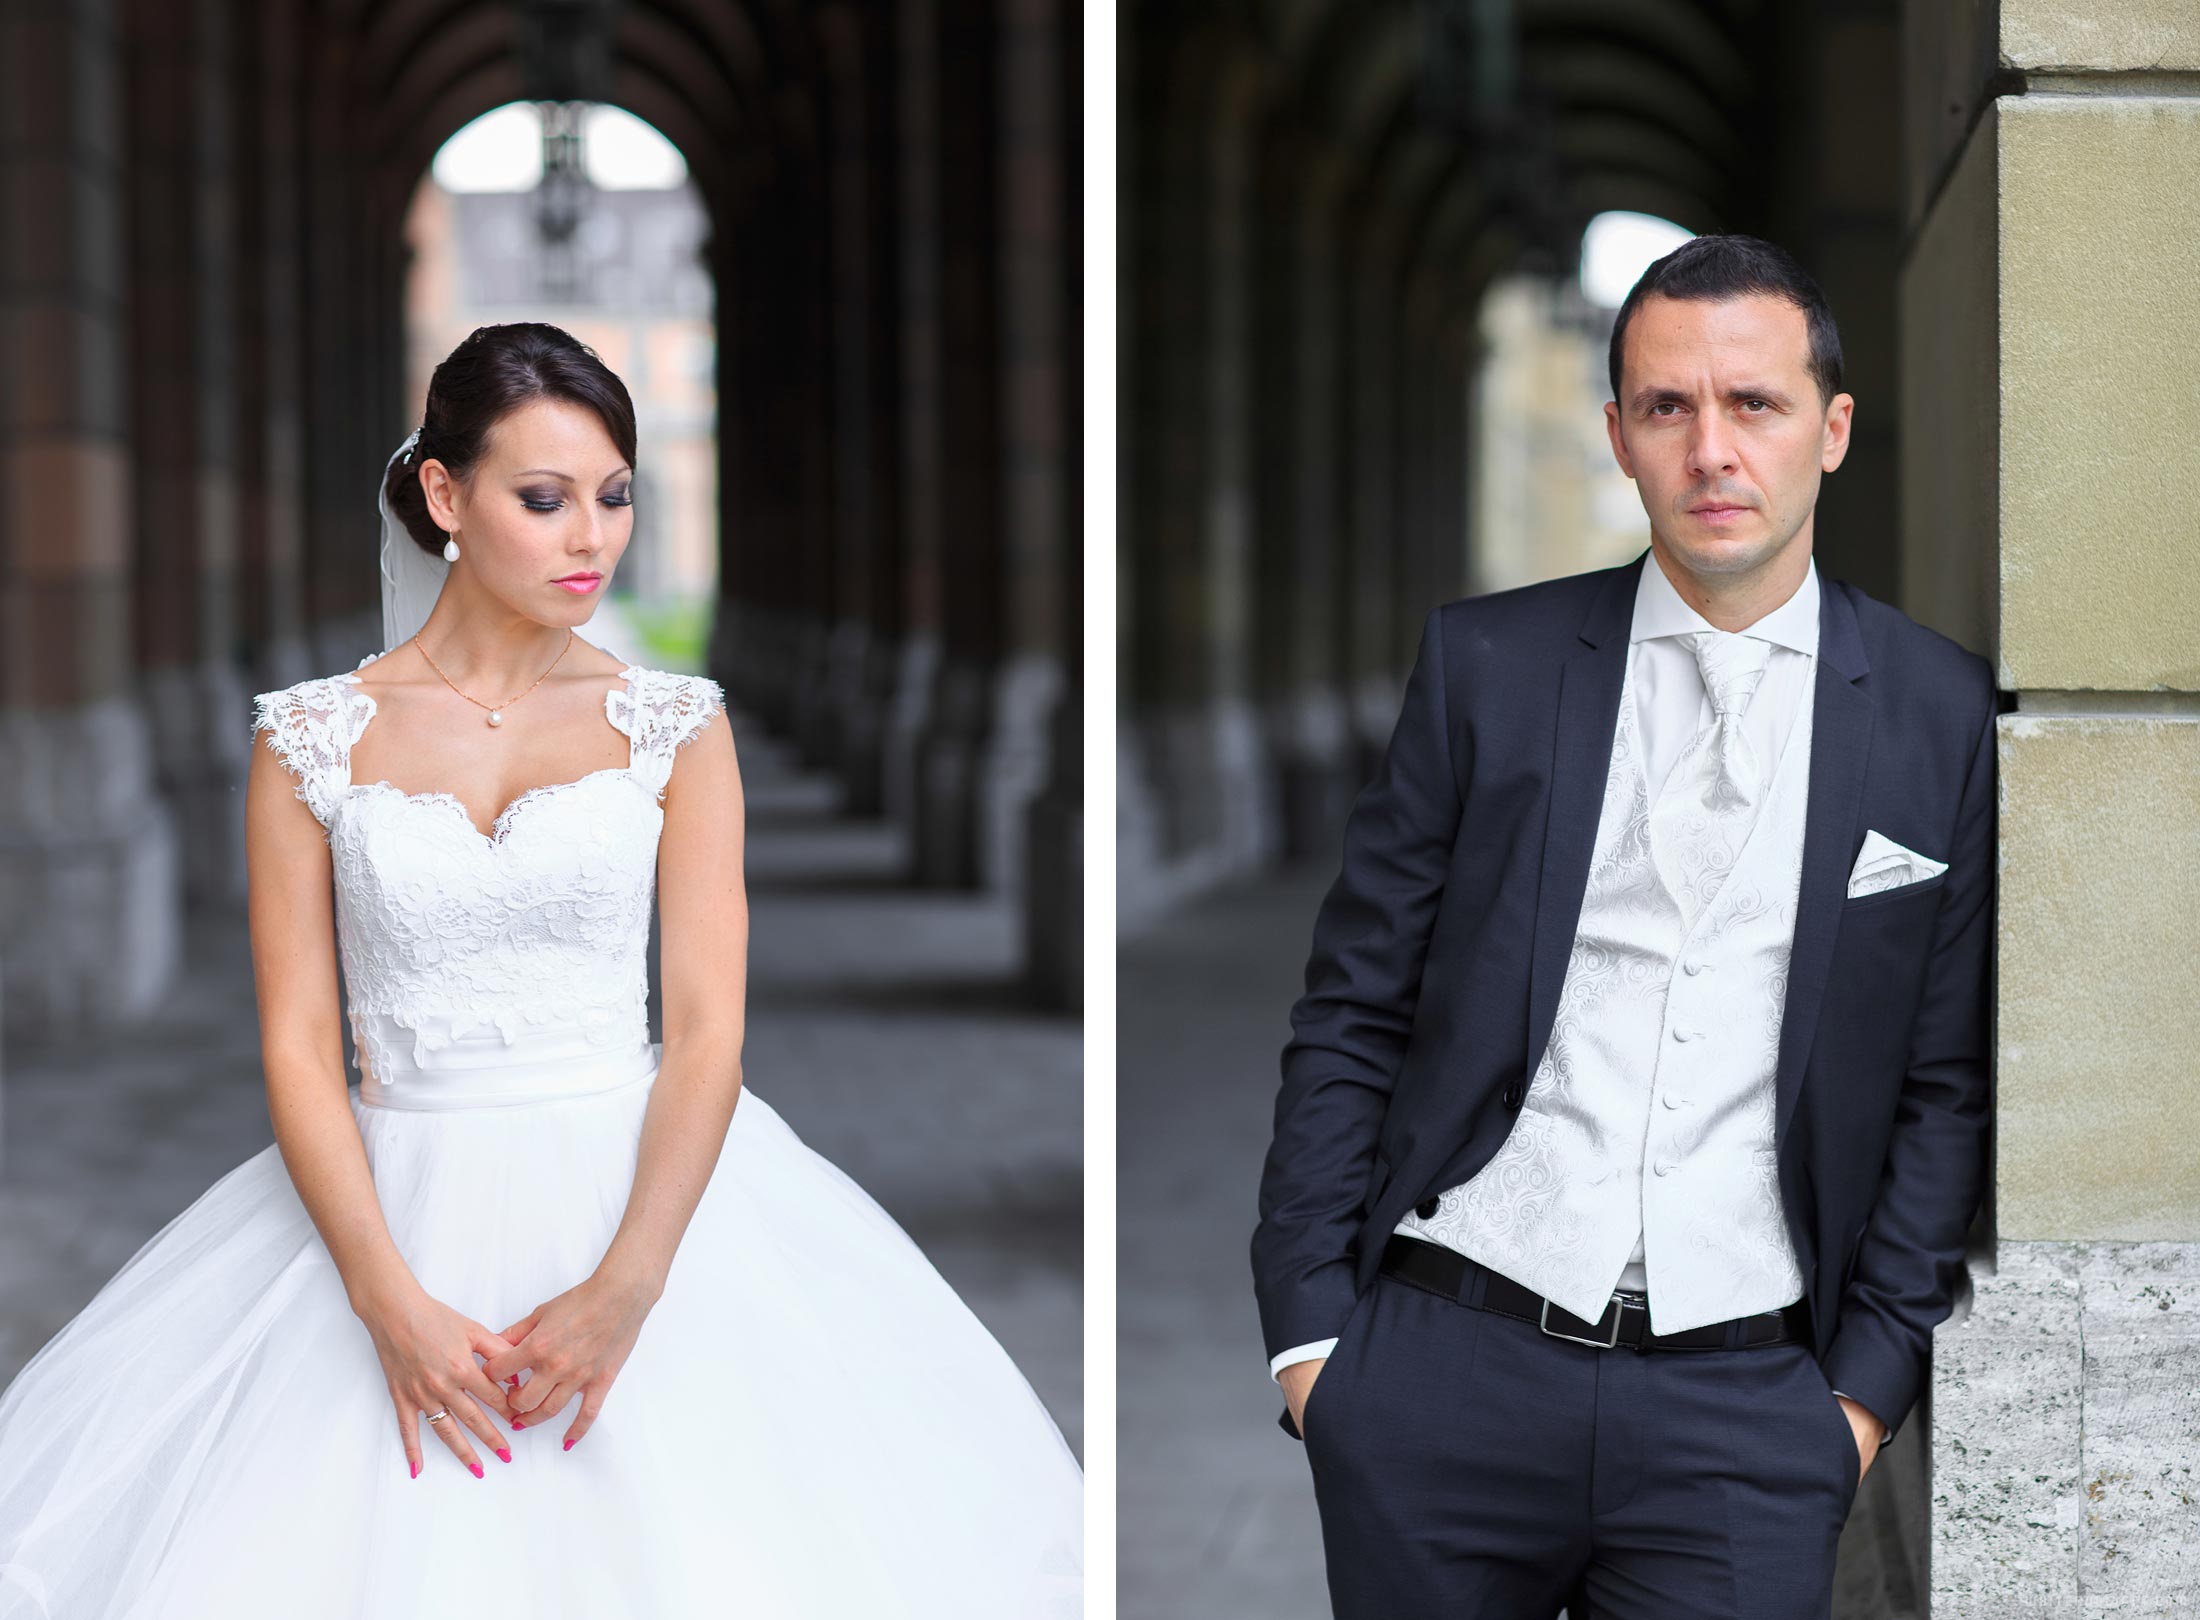 Professional photographer Munich - wedding anniversary gifts